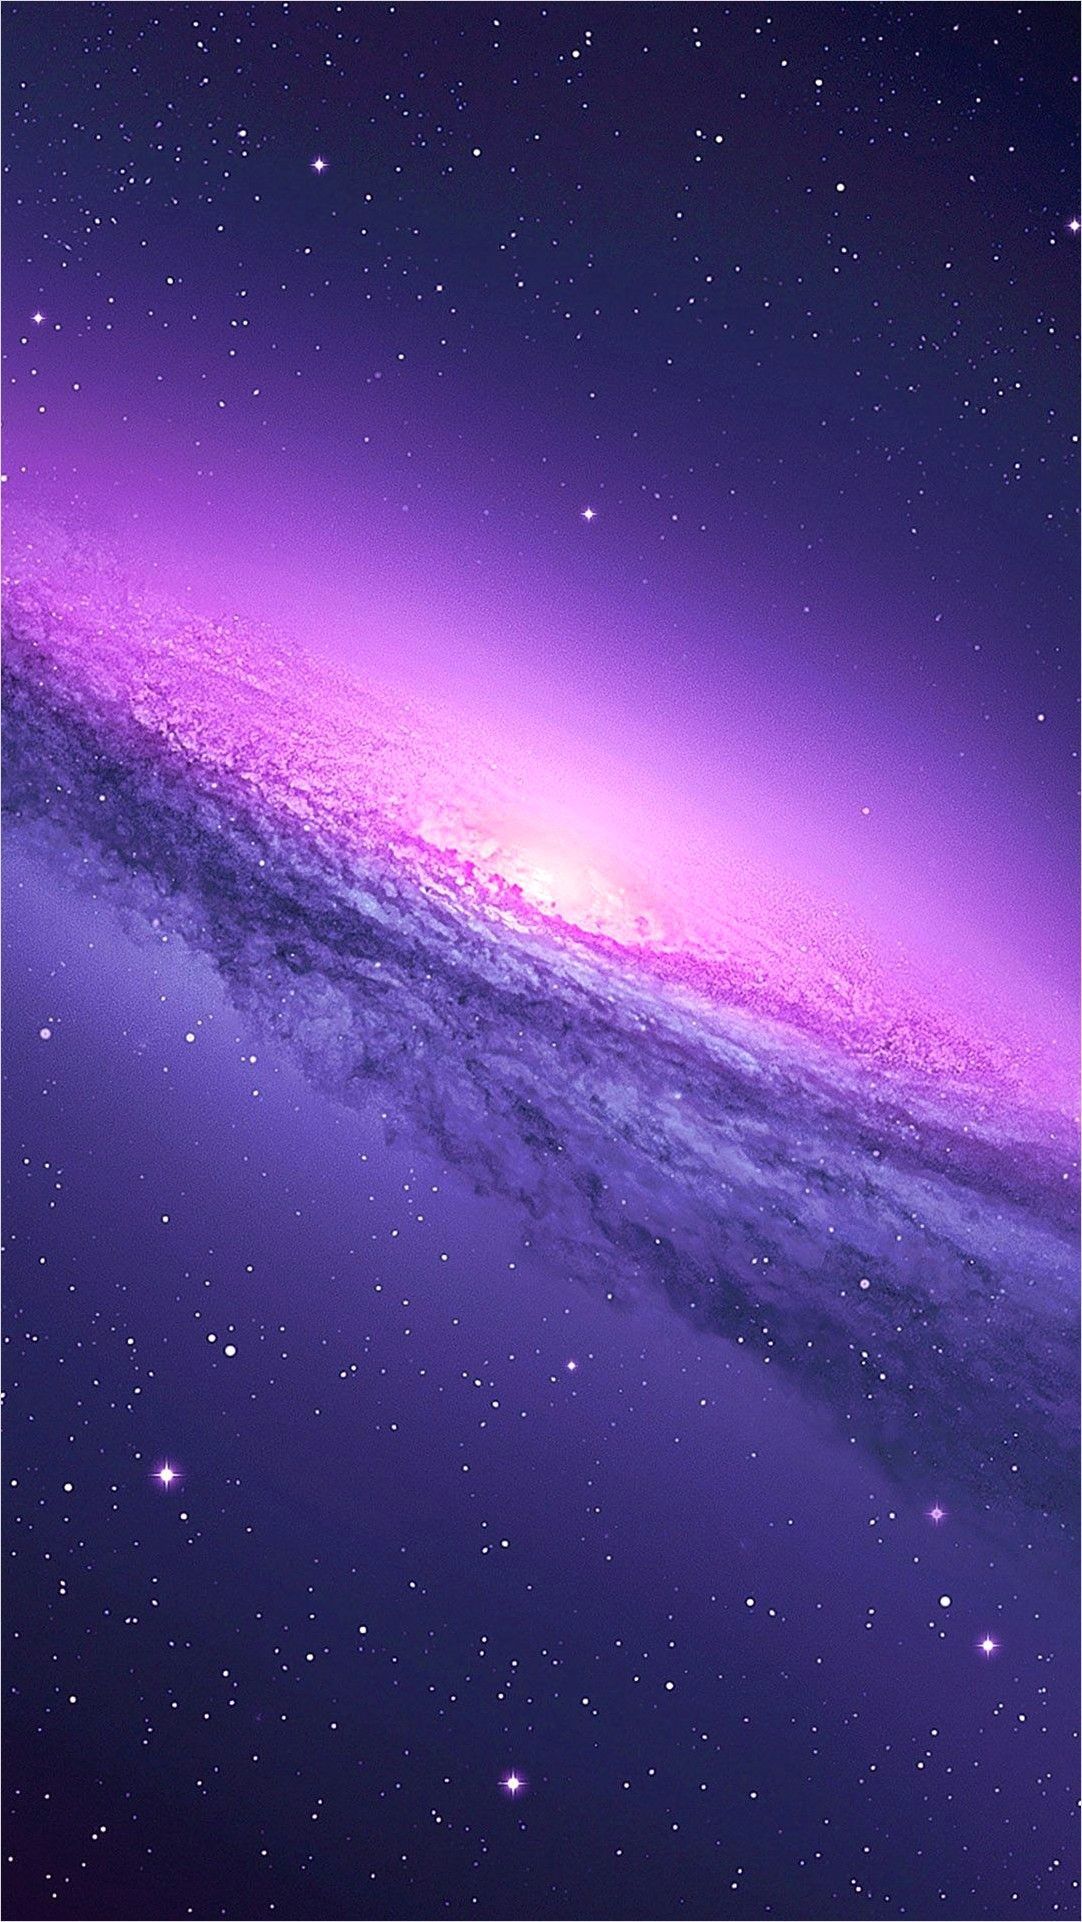 Pixels 4k Wallpaper. Purple galaxy wallpaper, iPhone 6 wallpaper background, Cool galaxy wallpaper